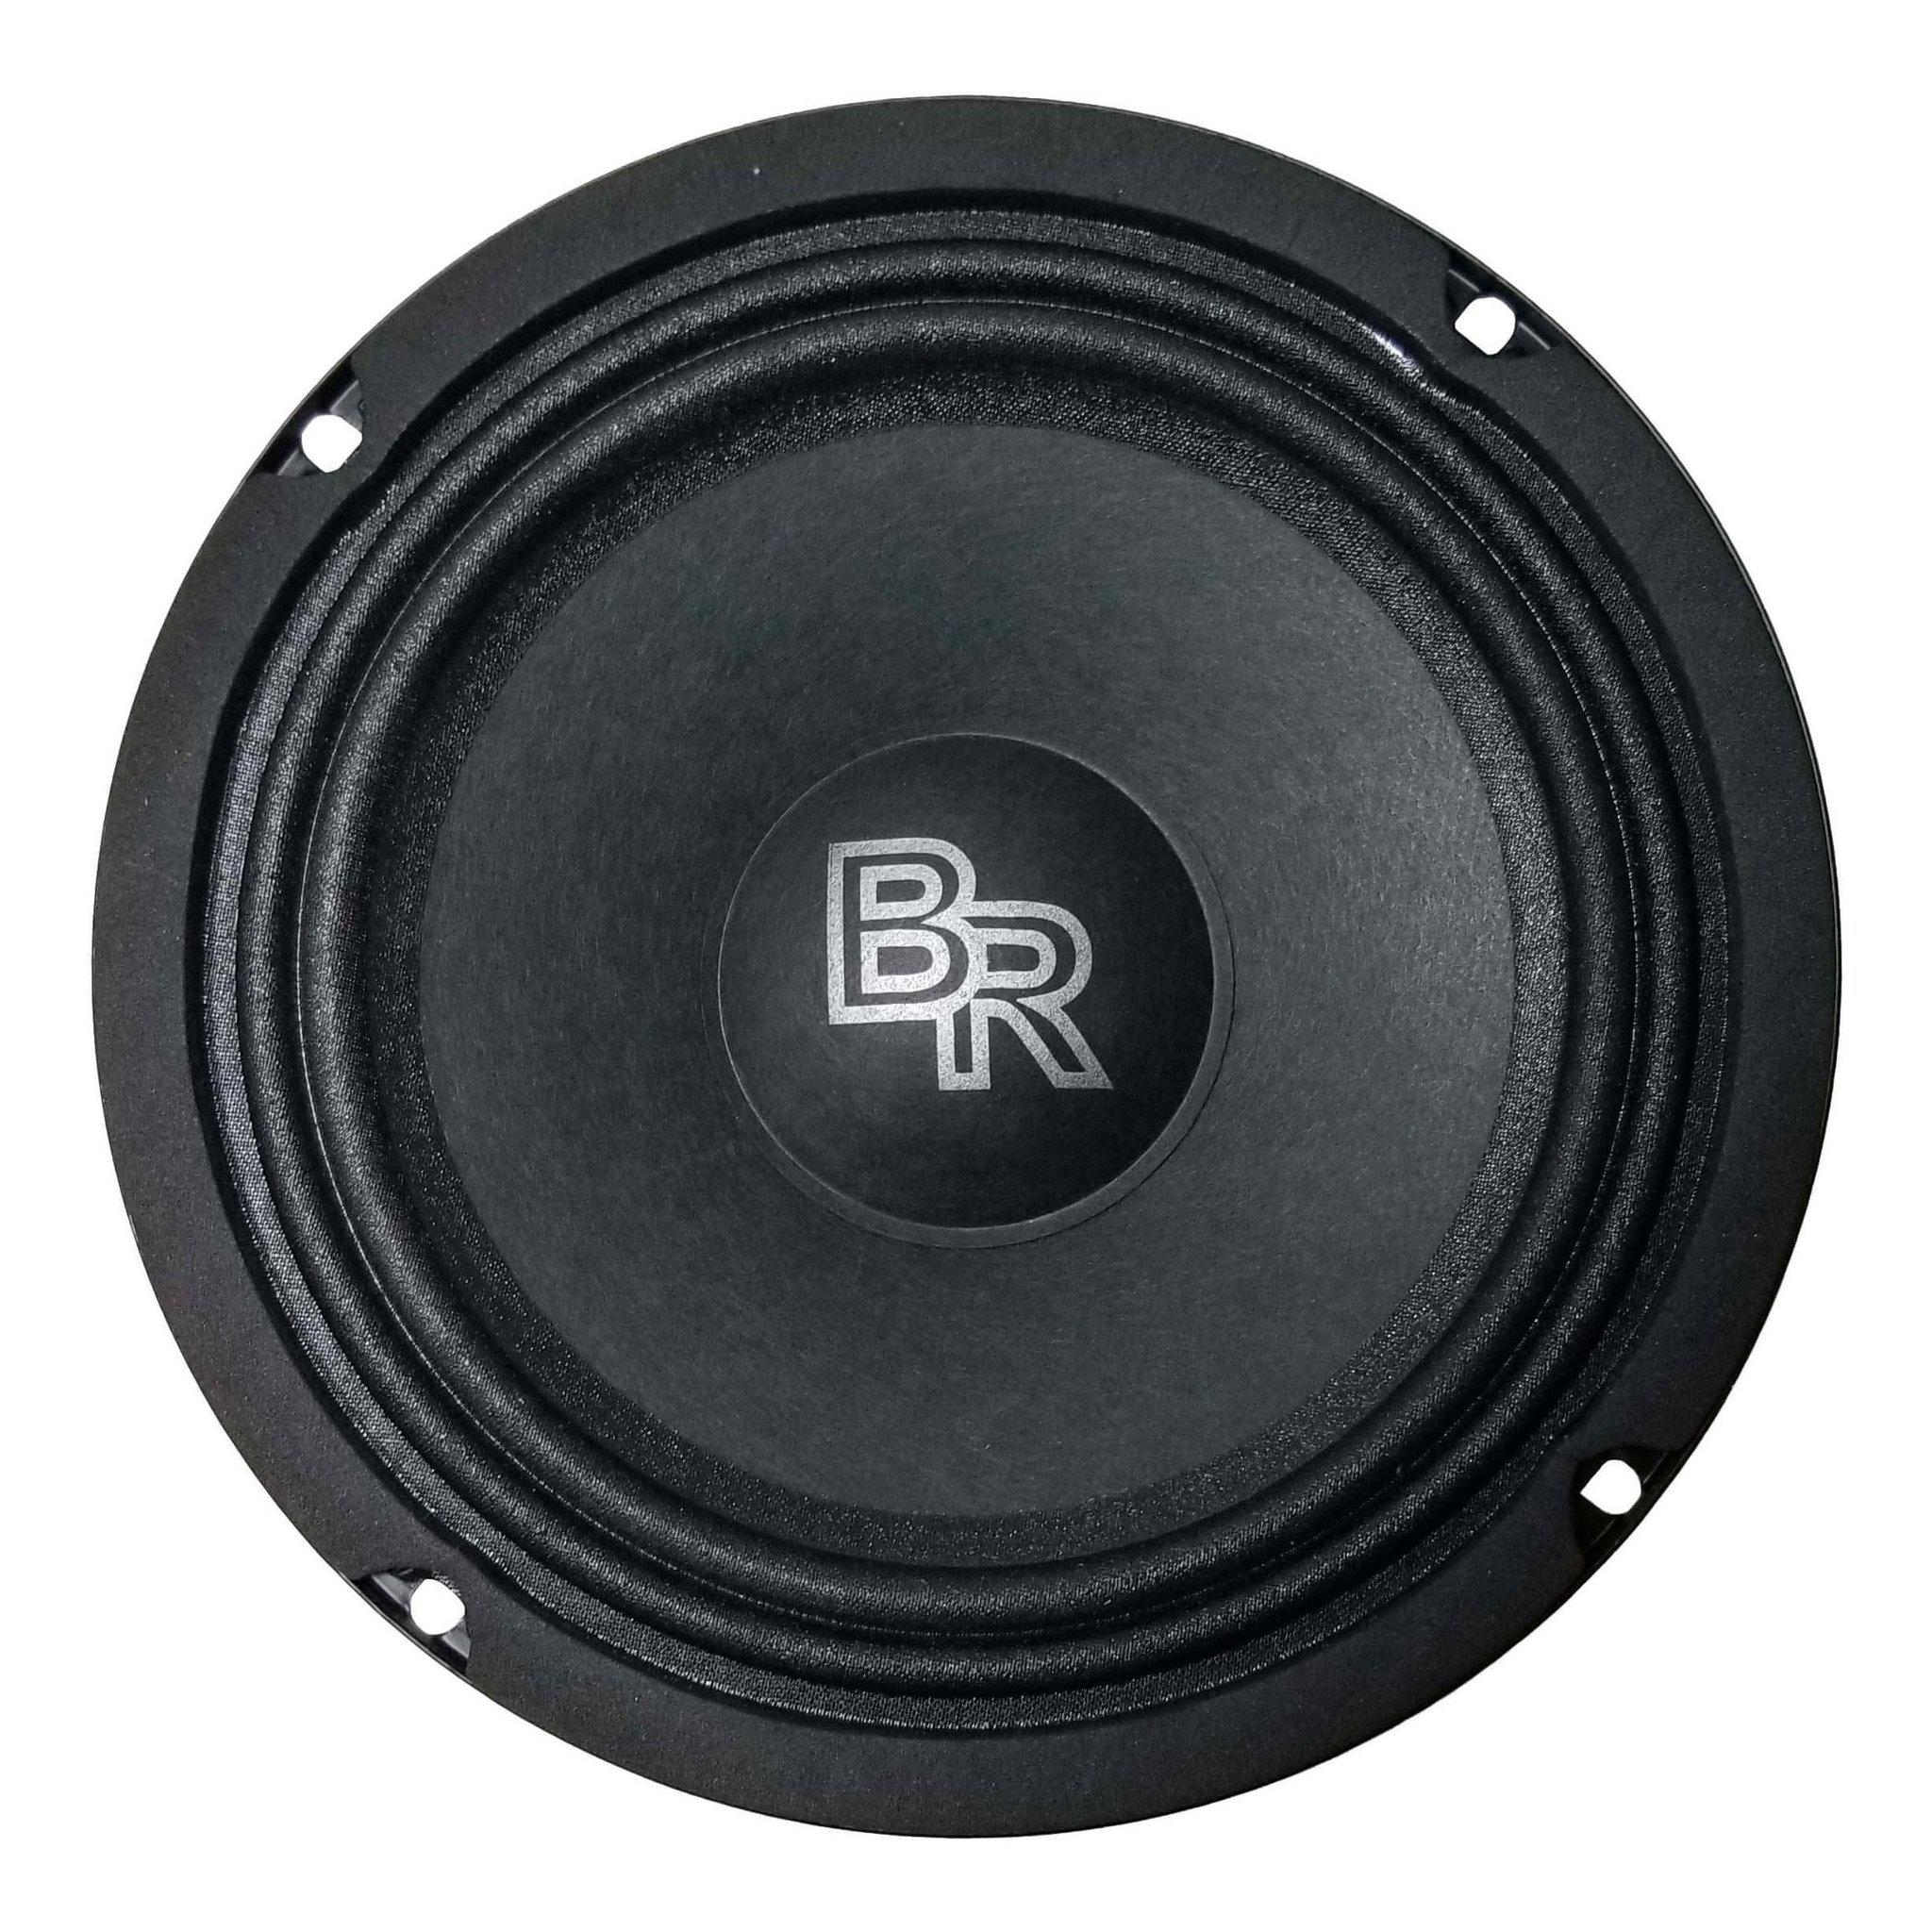  Bass Rockers 6.5 Loaded Chuchera Box with 6.5 Outdoor Home &  Speakers & Tweeters 800W - Best for Car UTV, ATV, Camper, DJ, Pro Audio Use  : Electronics